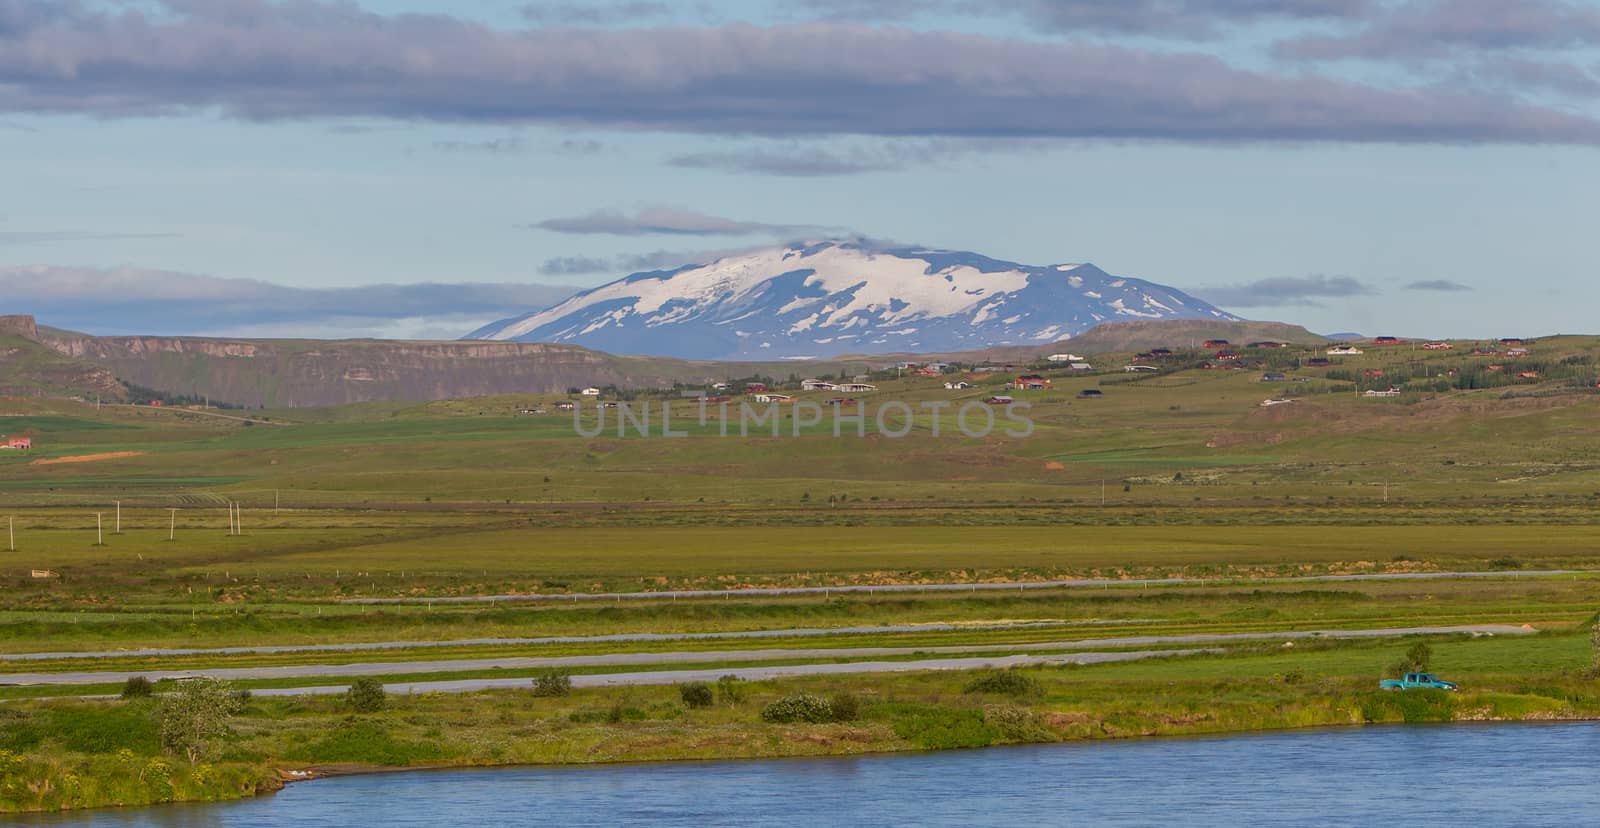 The volcano Hekla in Iceland shot in summer by michaklootwijk